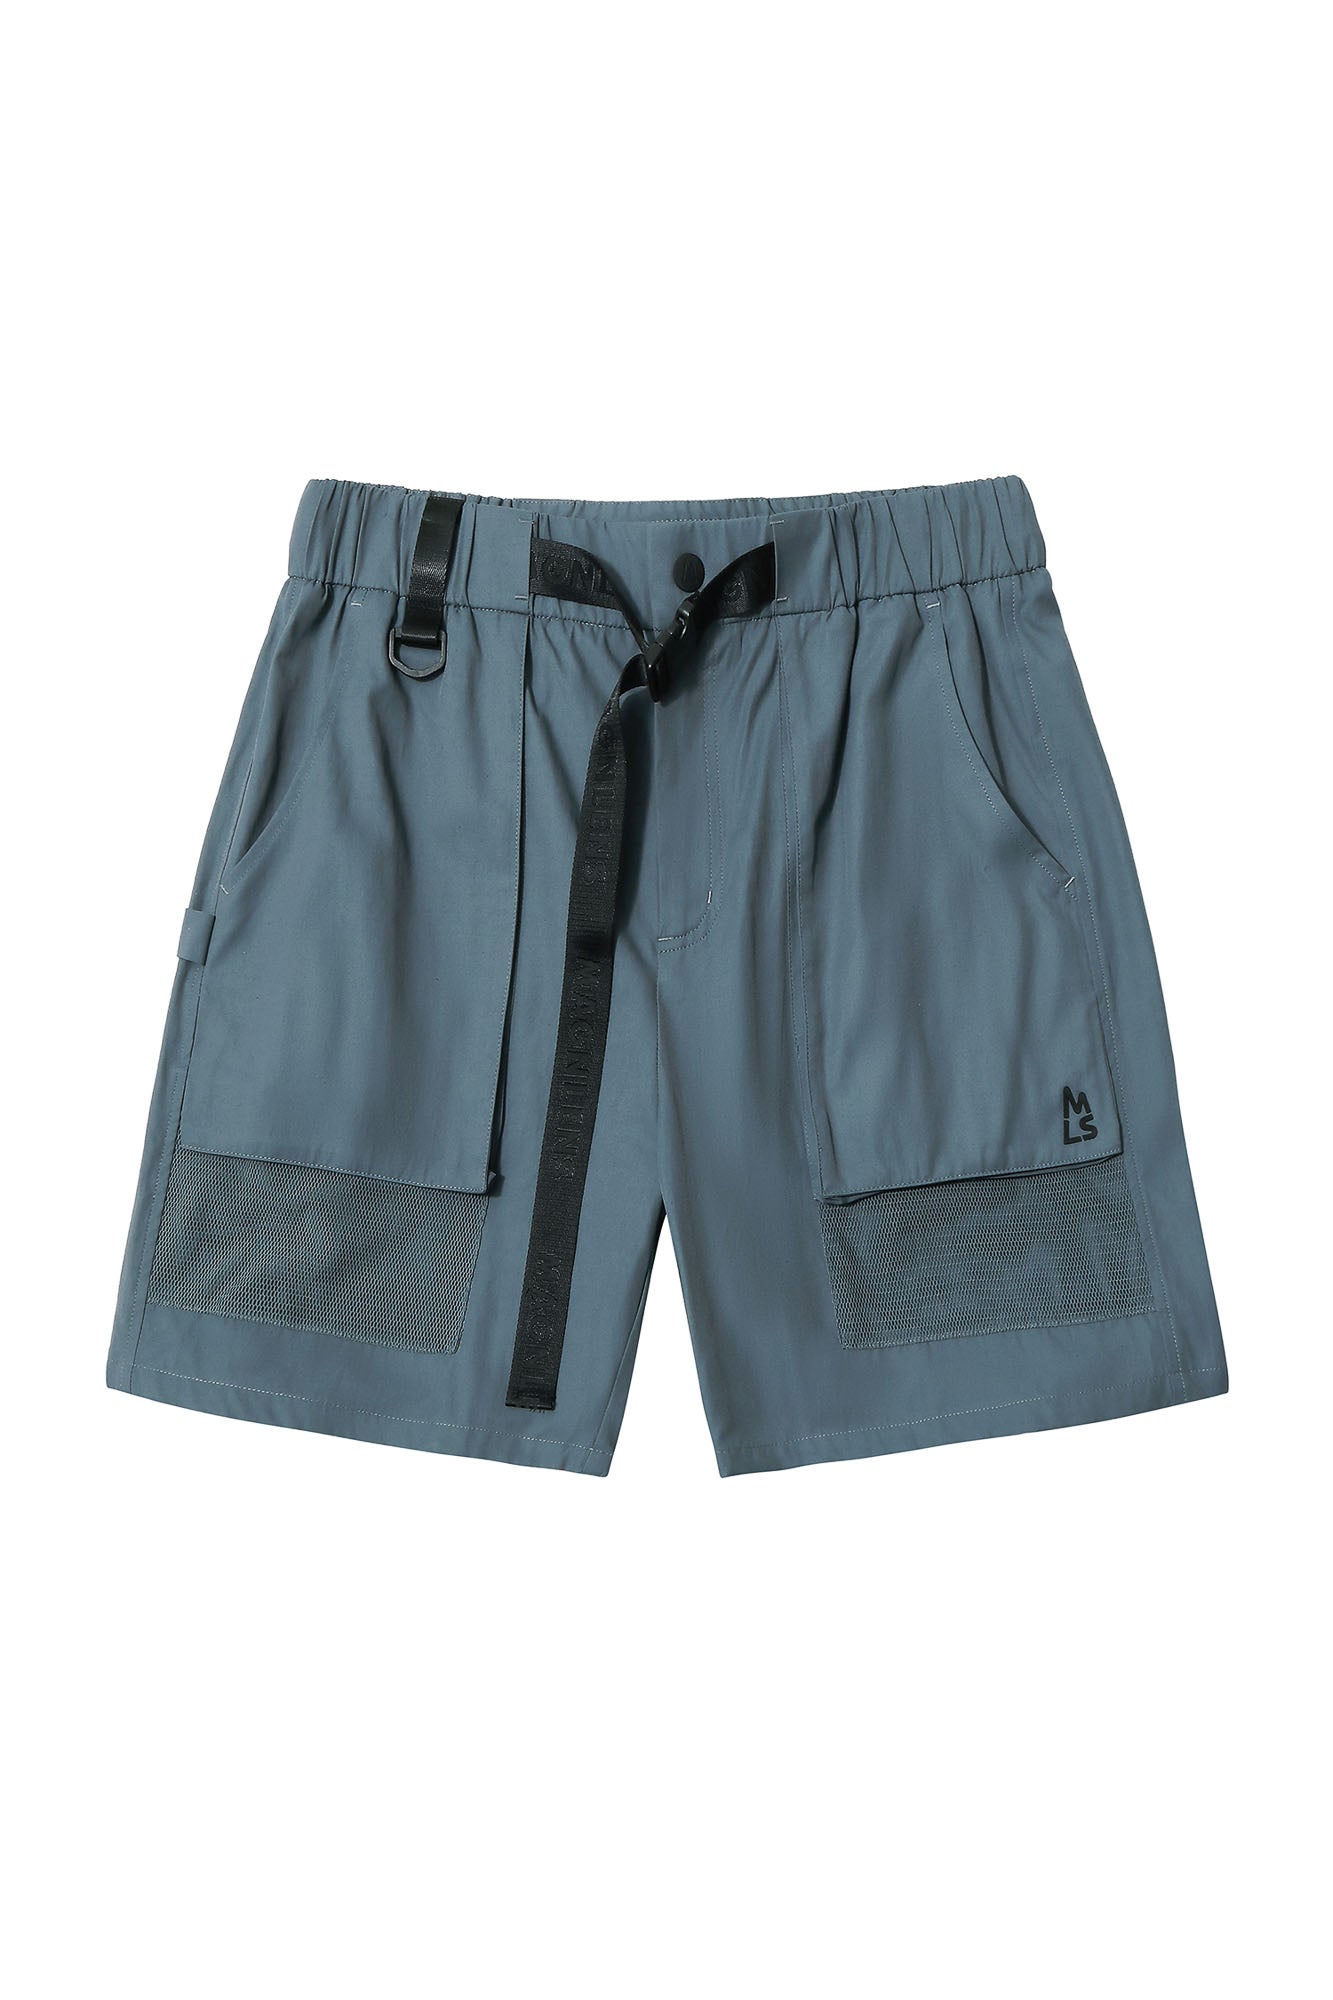 Baran Cargo Walking Shorts